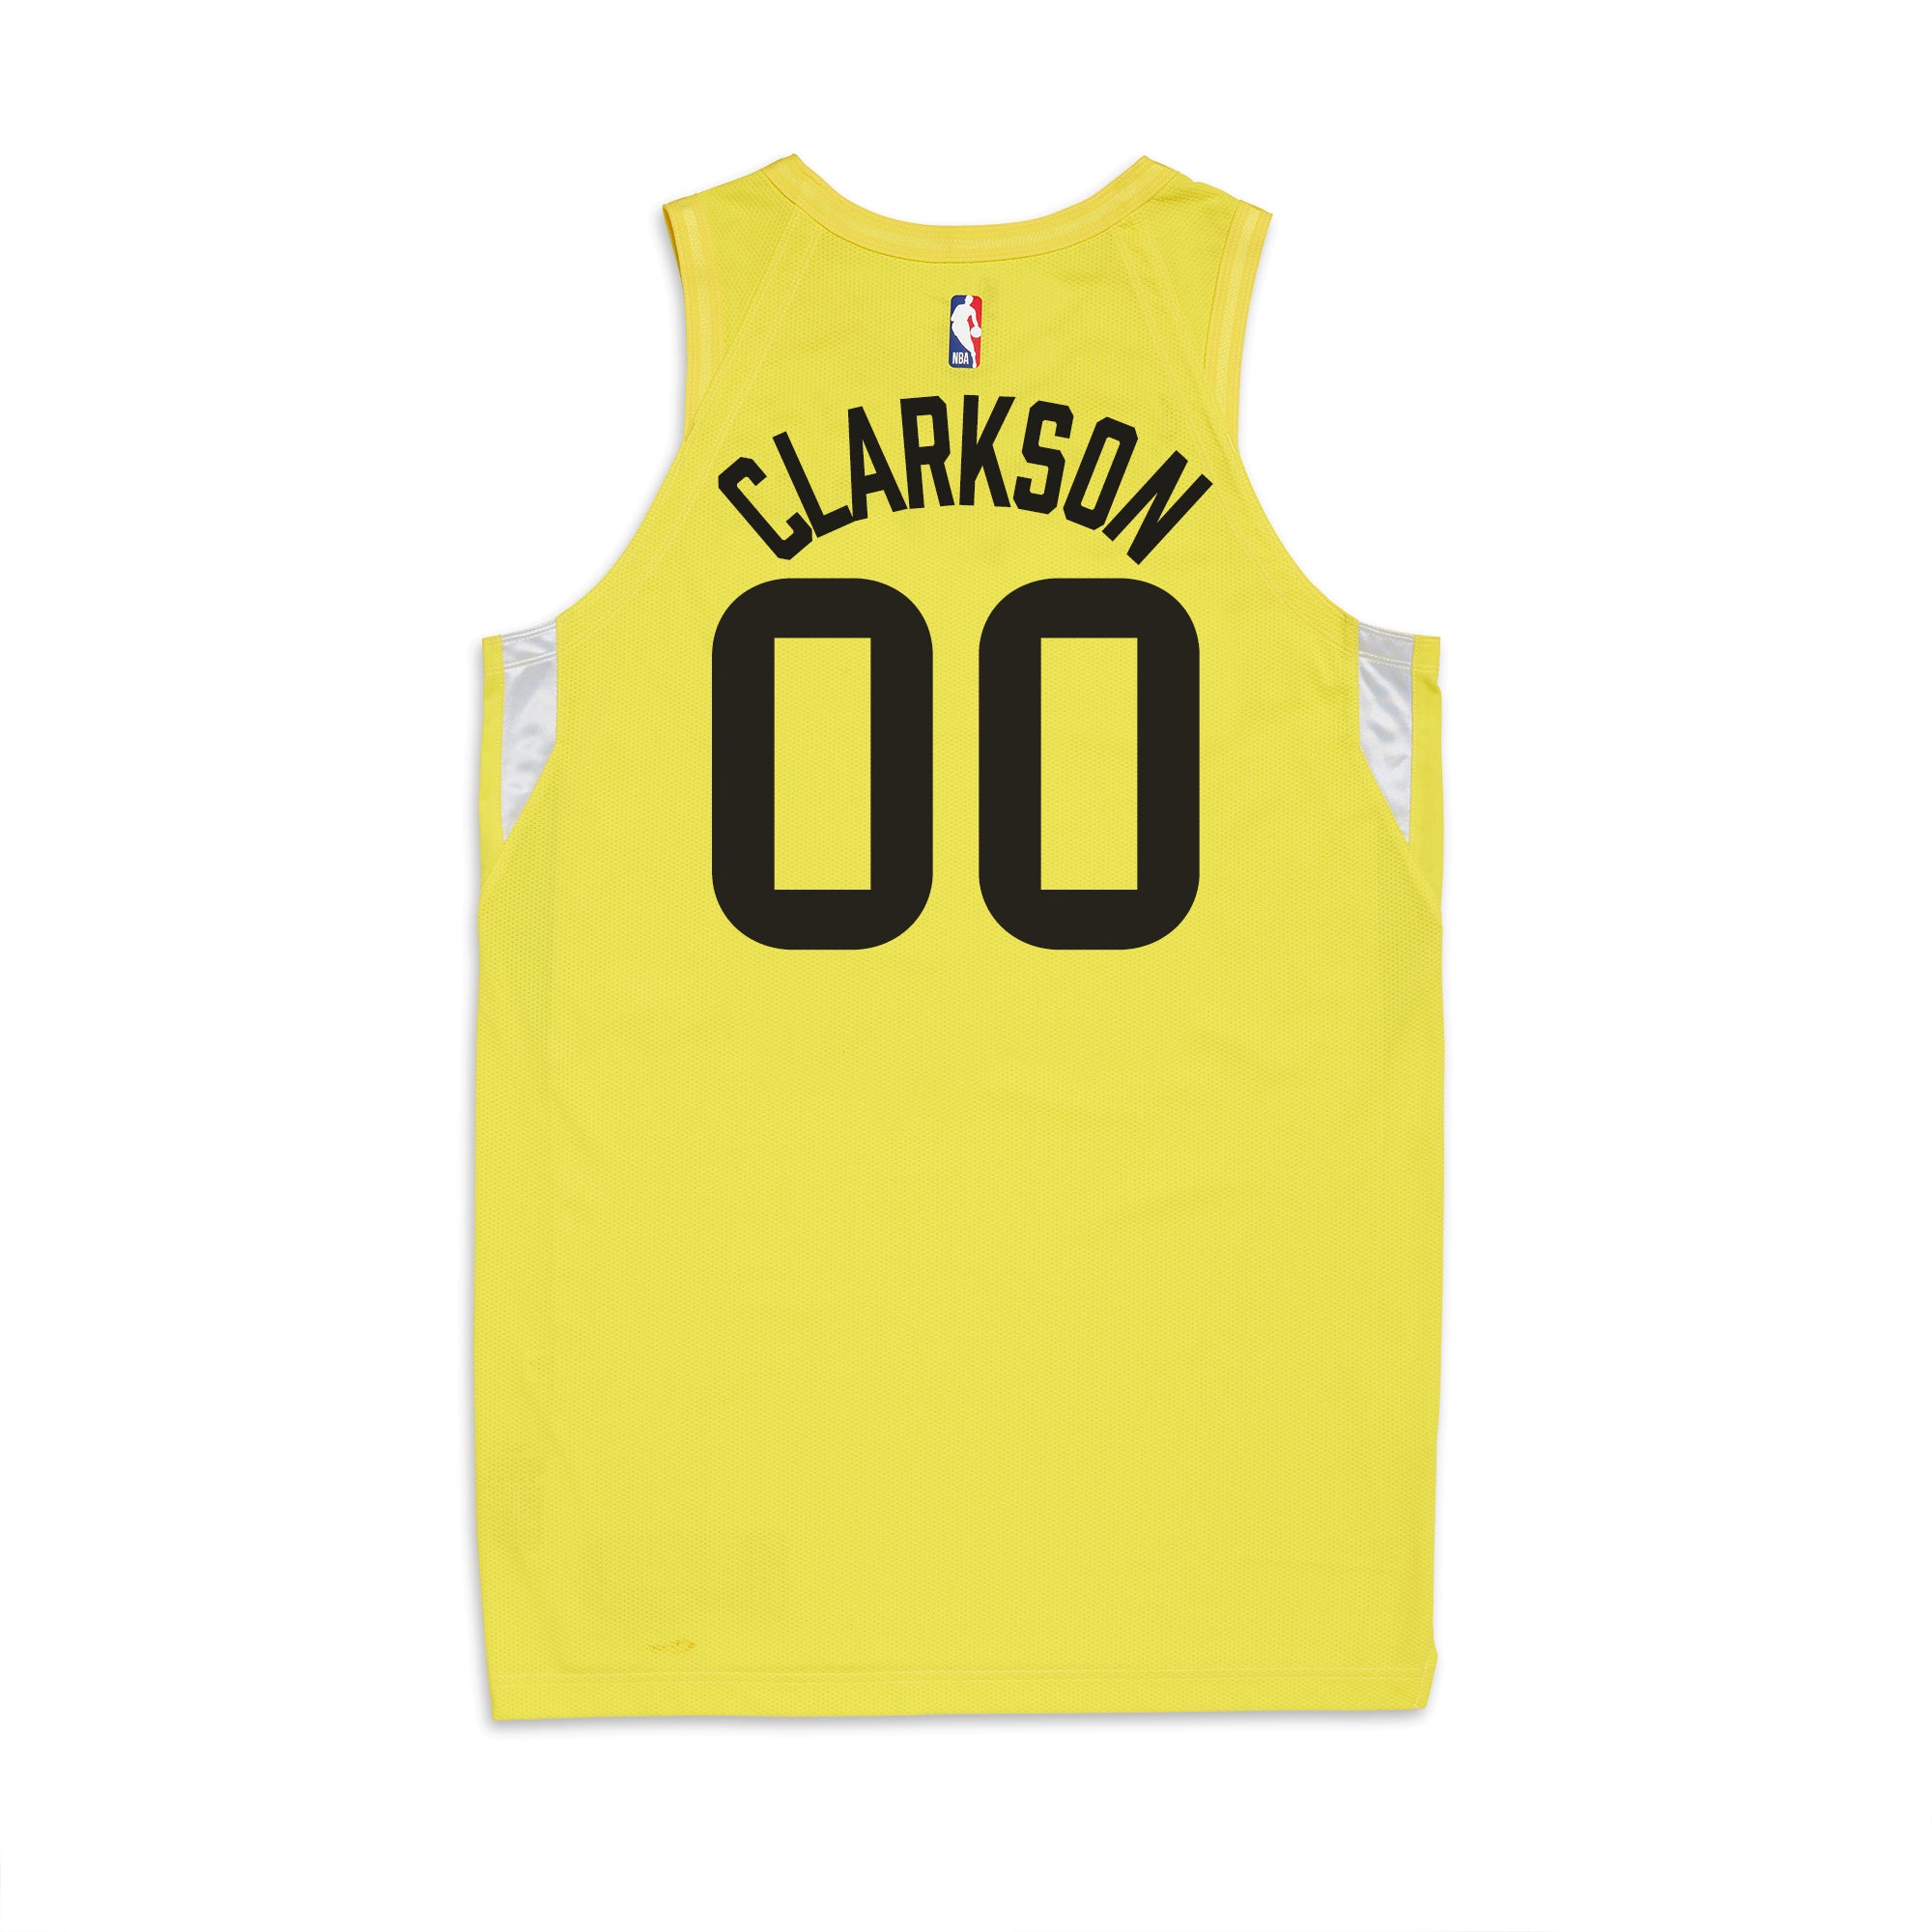 Jordan Clarkson Jersey  Get Jordan Clarkson Game, Lemited and